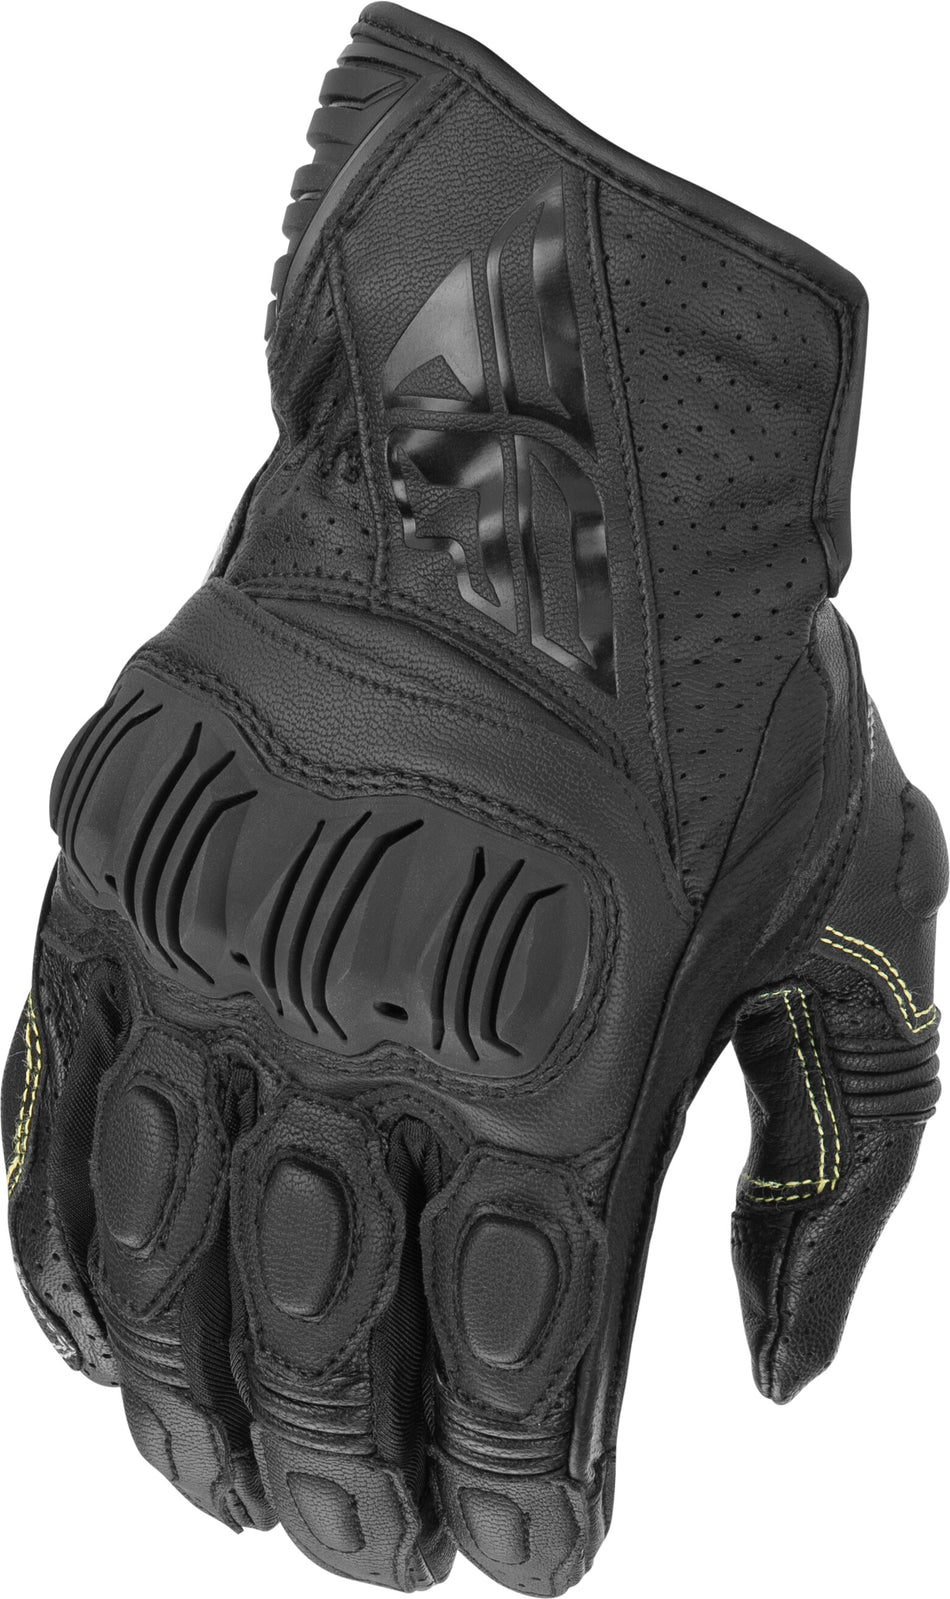 FLY RACING Brawler Gloves Black Lg 476-2090L